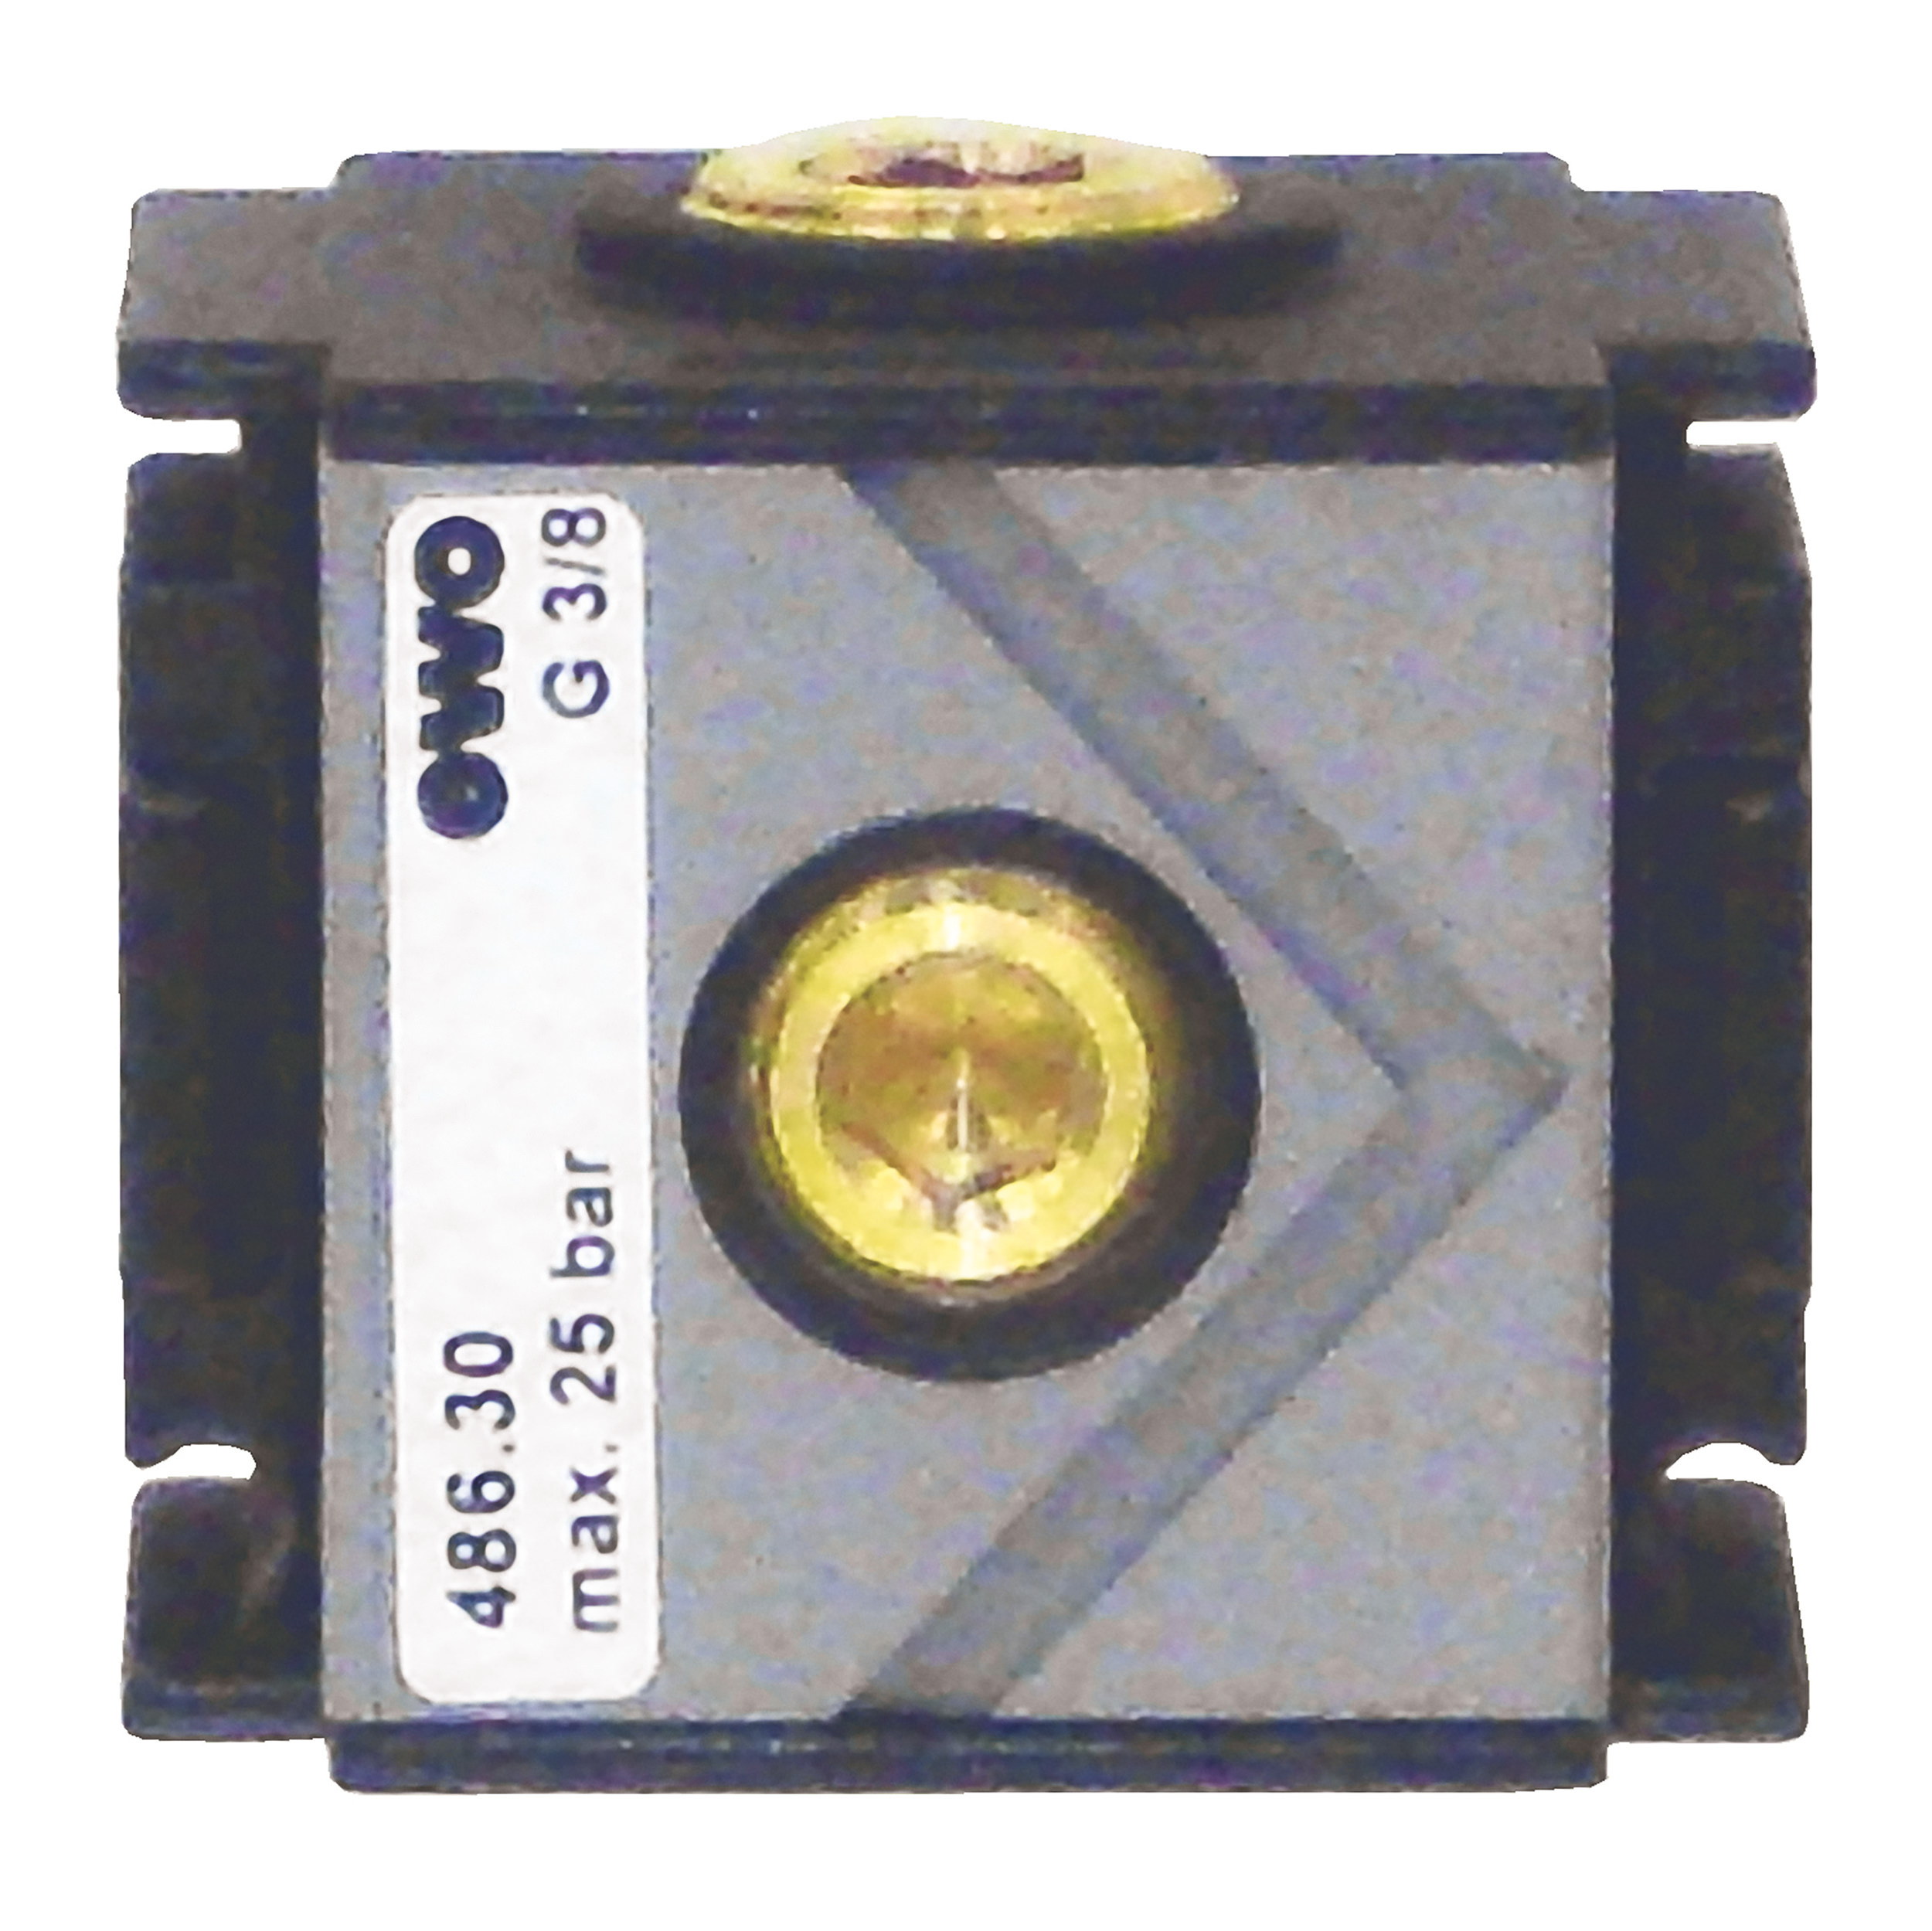 Distributor type 486 G ¼–G 1